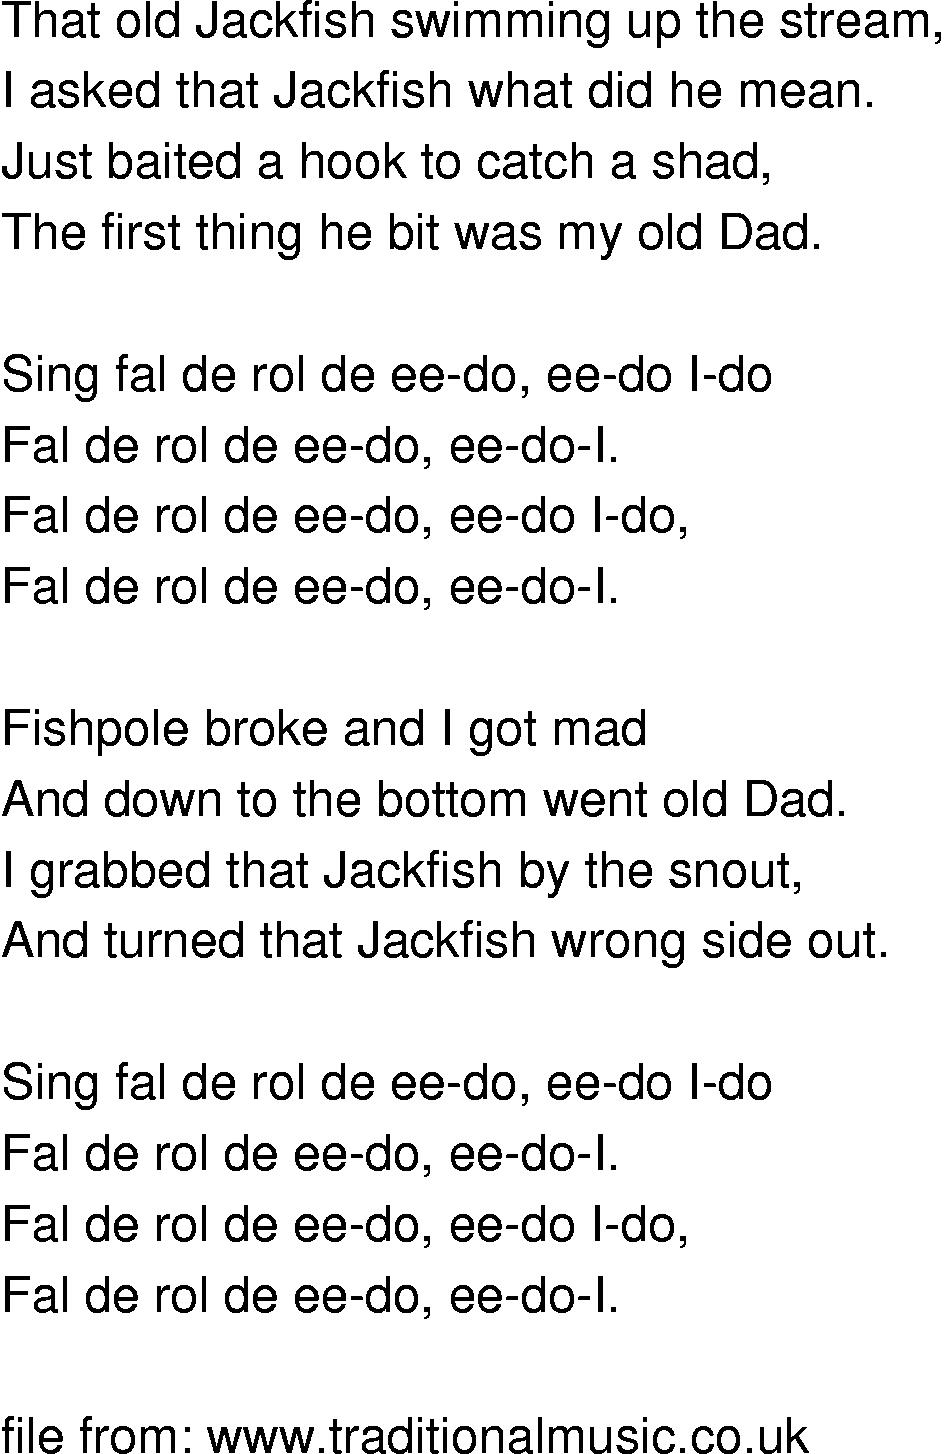 Old-Time (oldtimey) Song Lyrics - jackfish